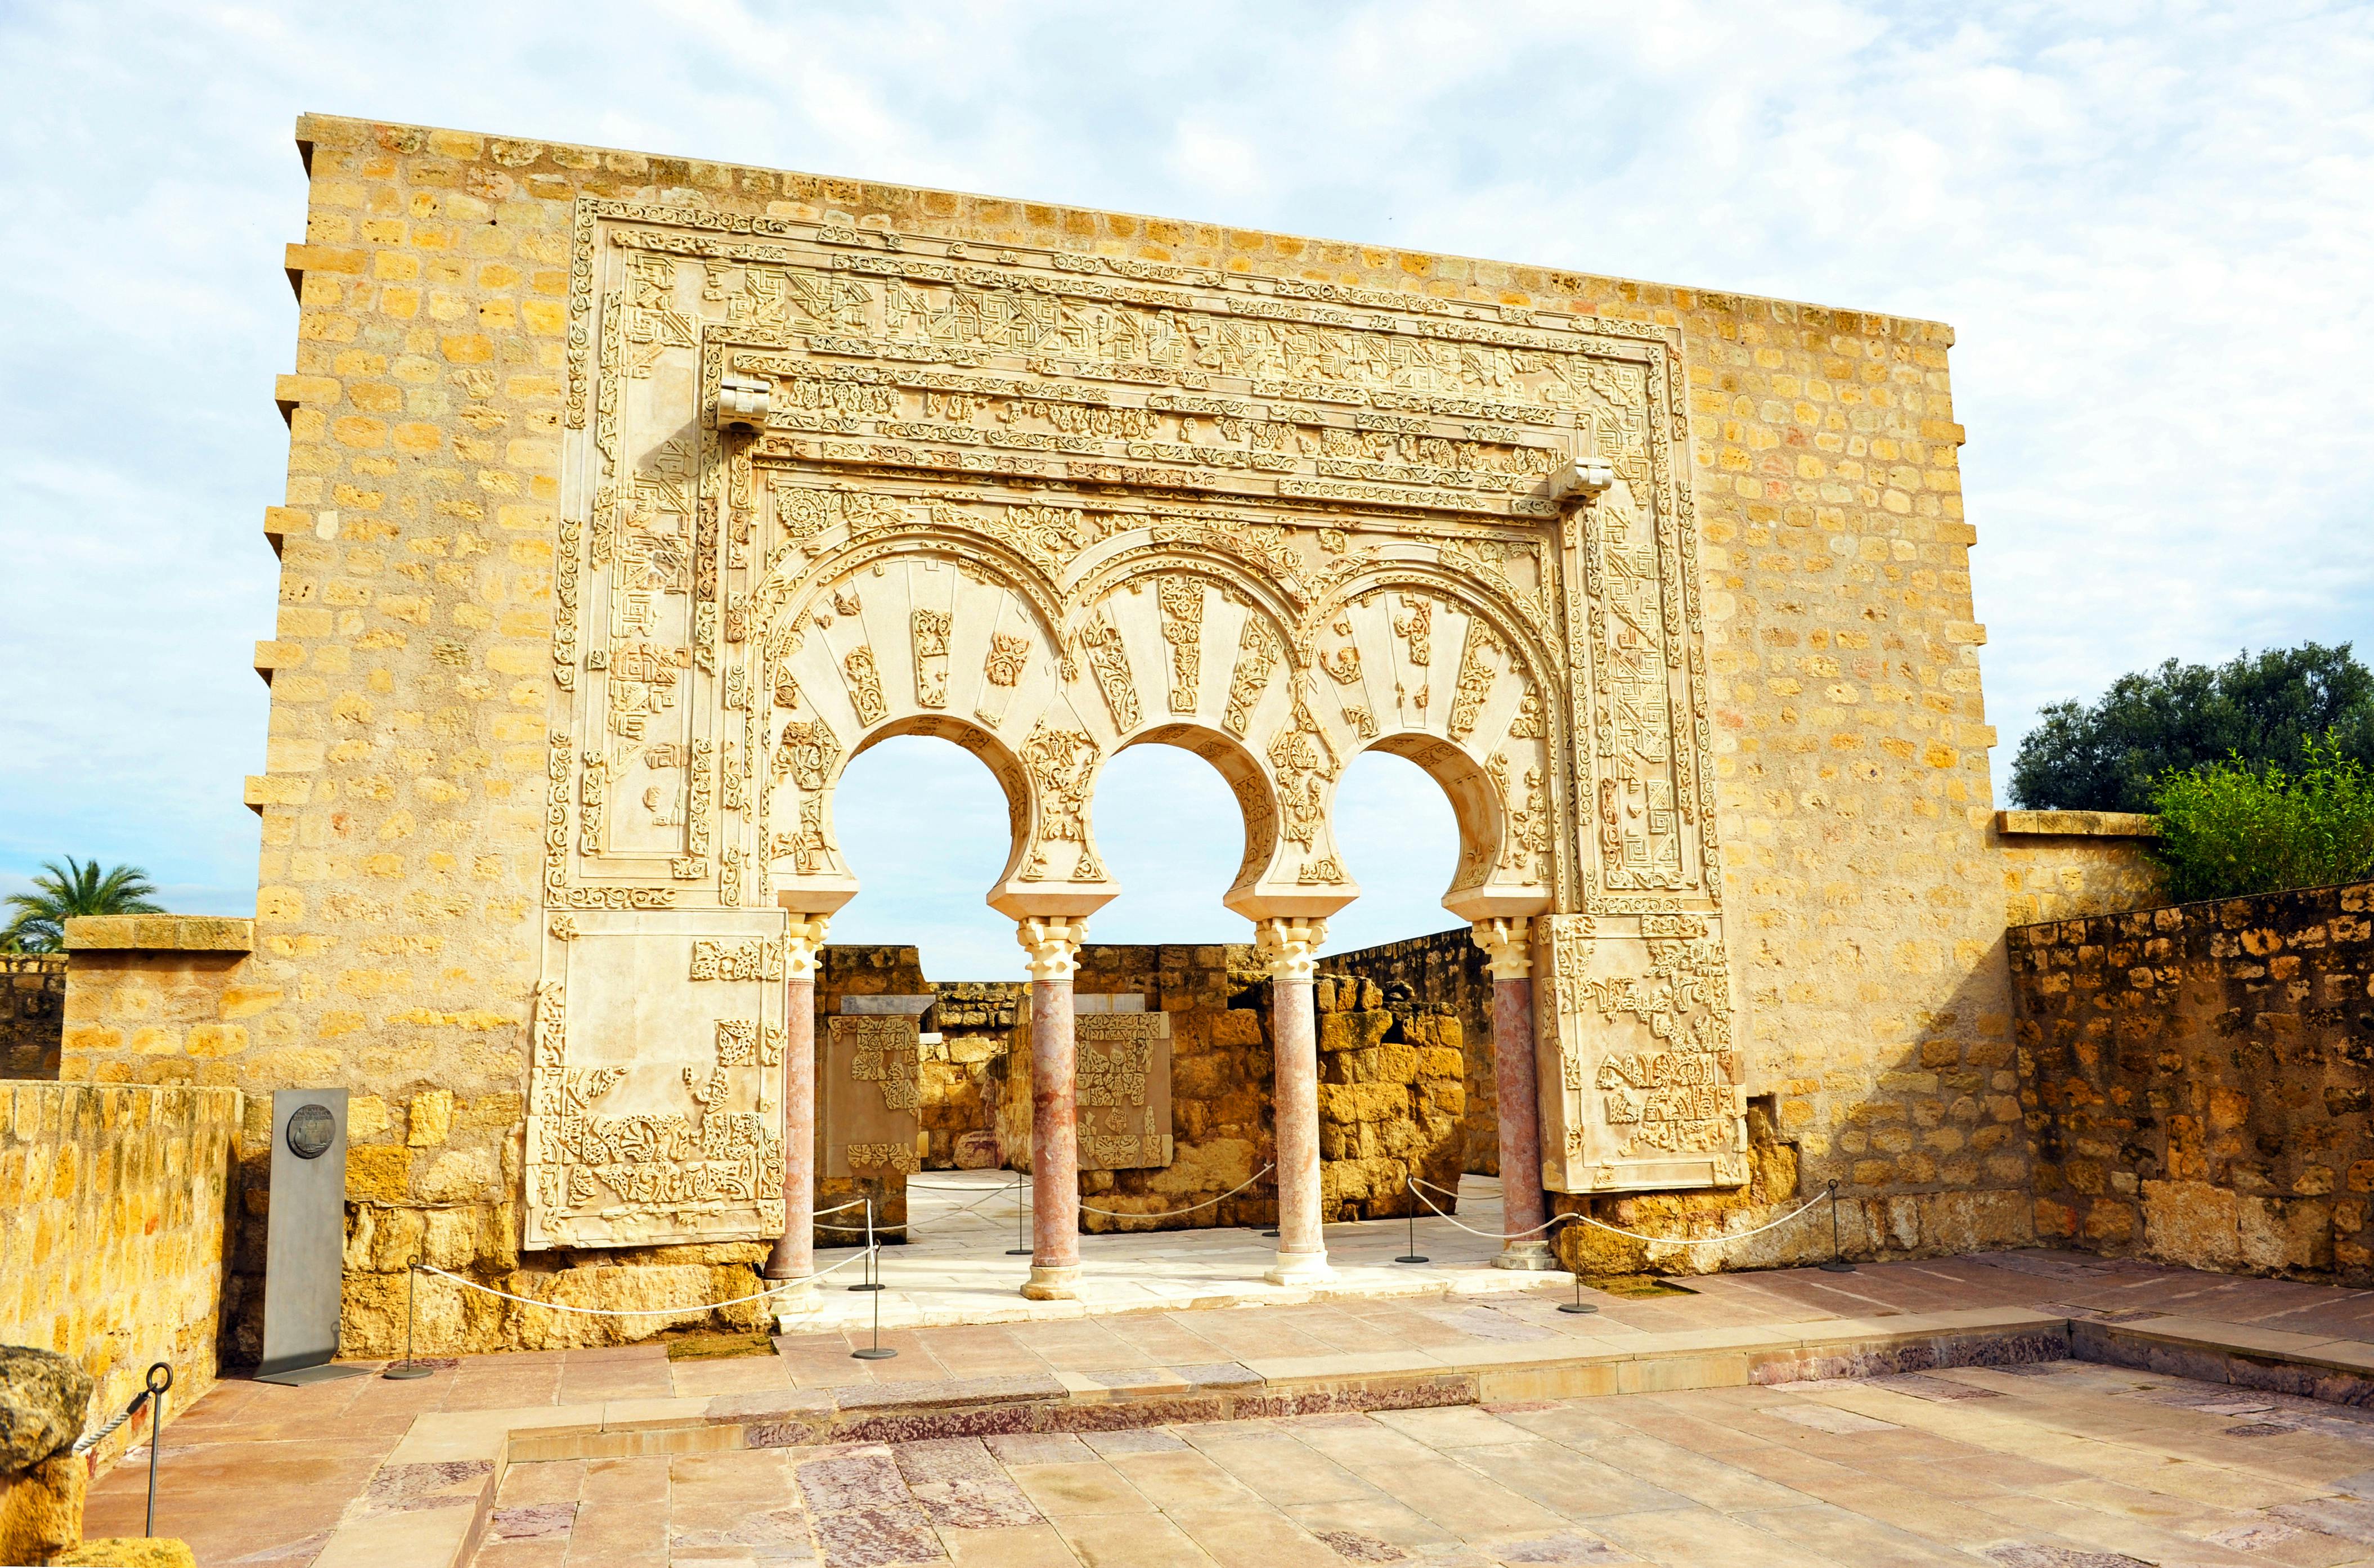 Guided tour of the Medina Azahara archeological site